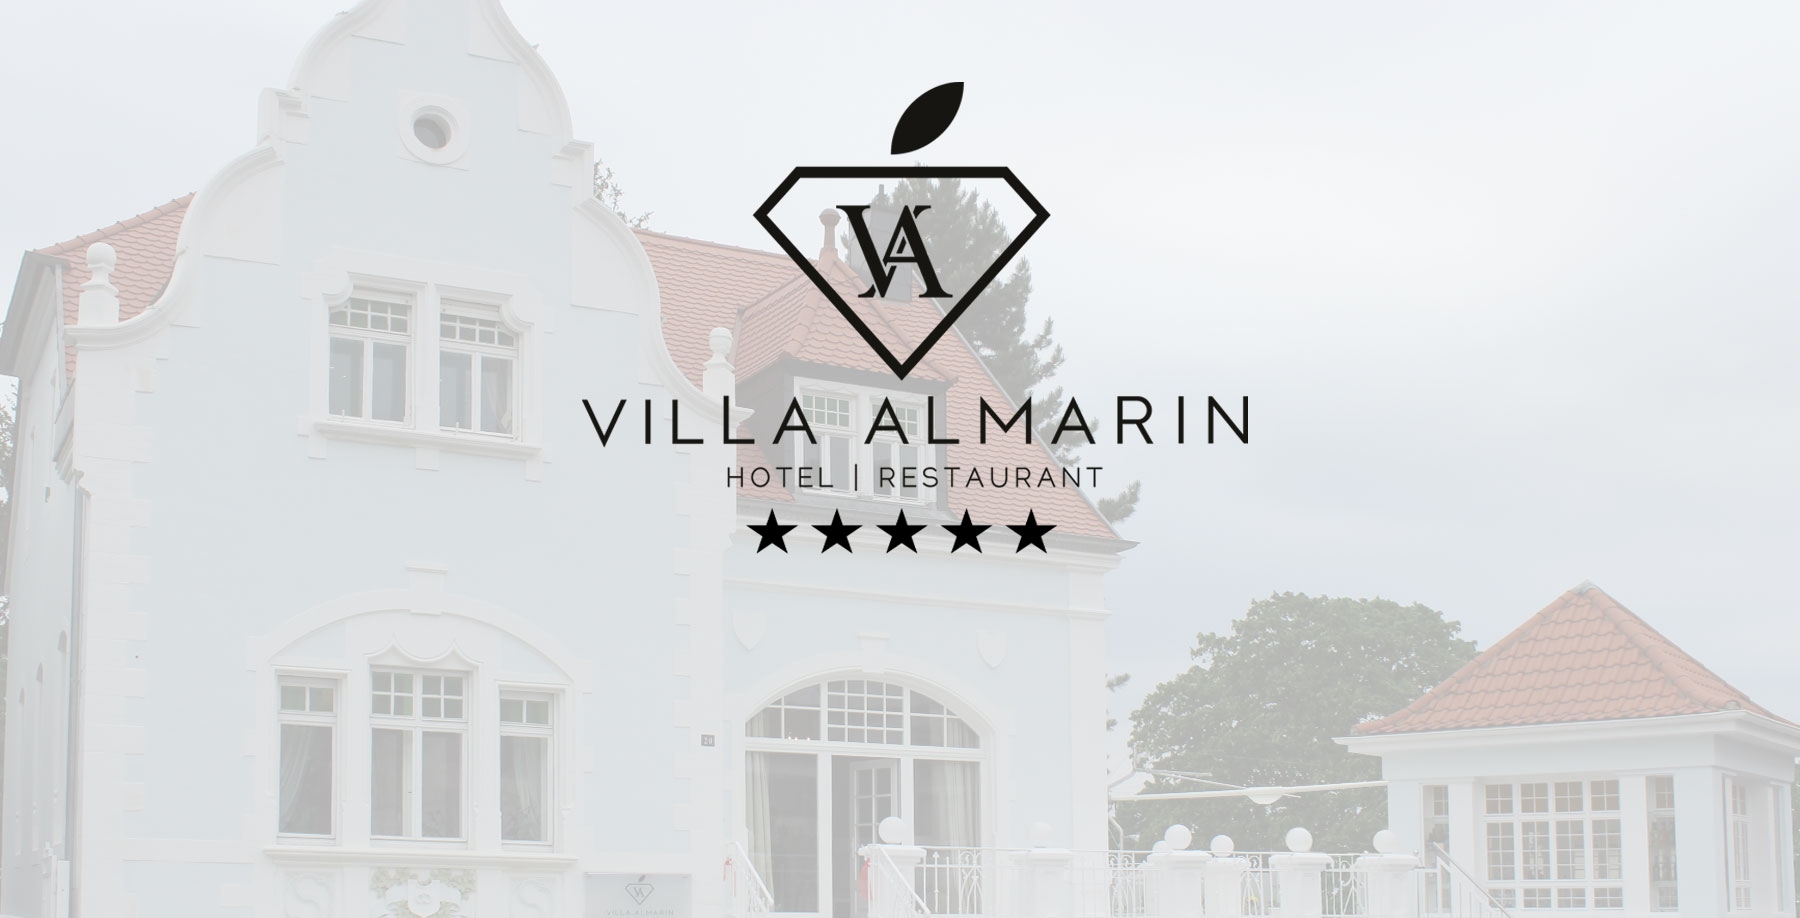 Villa Almarin Hotel - St. Ingbert - Germany